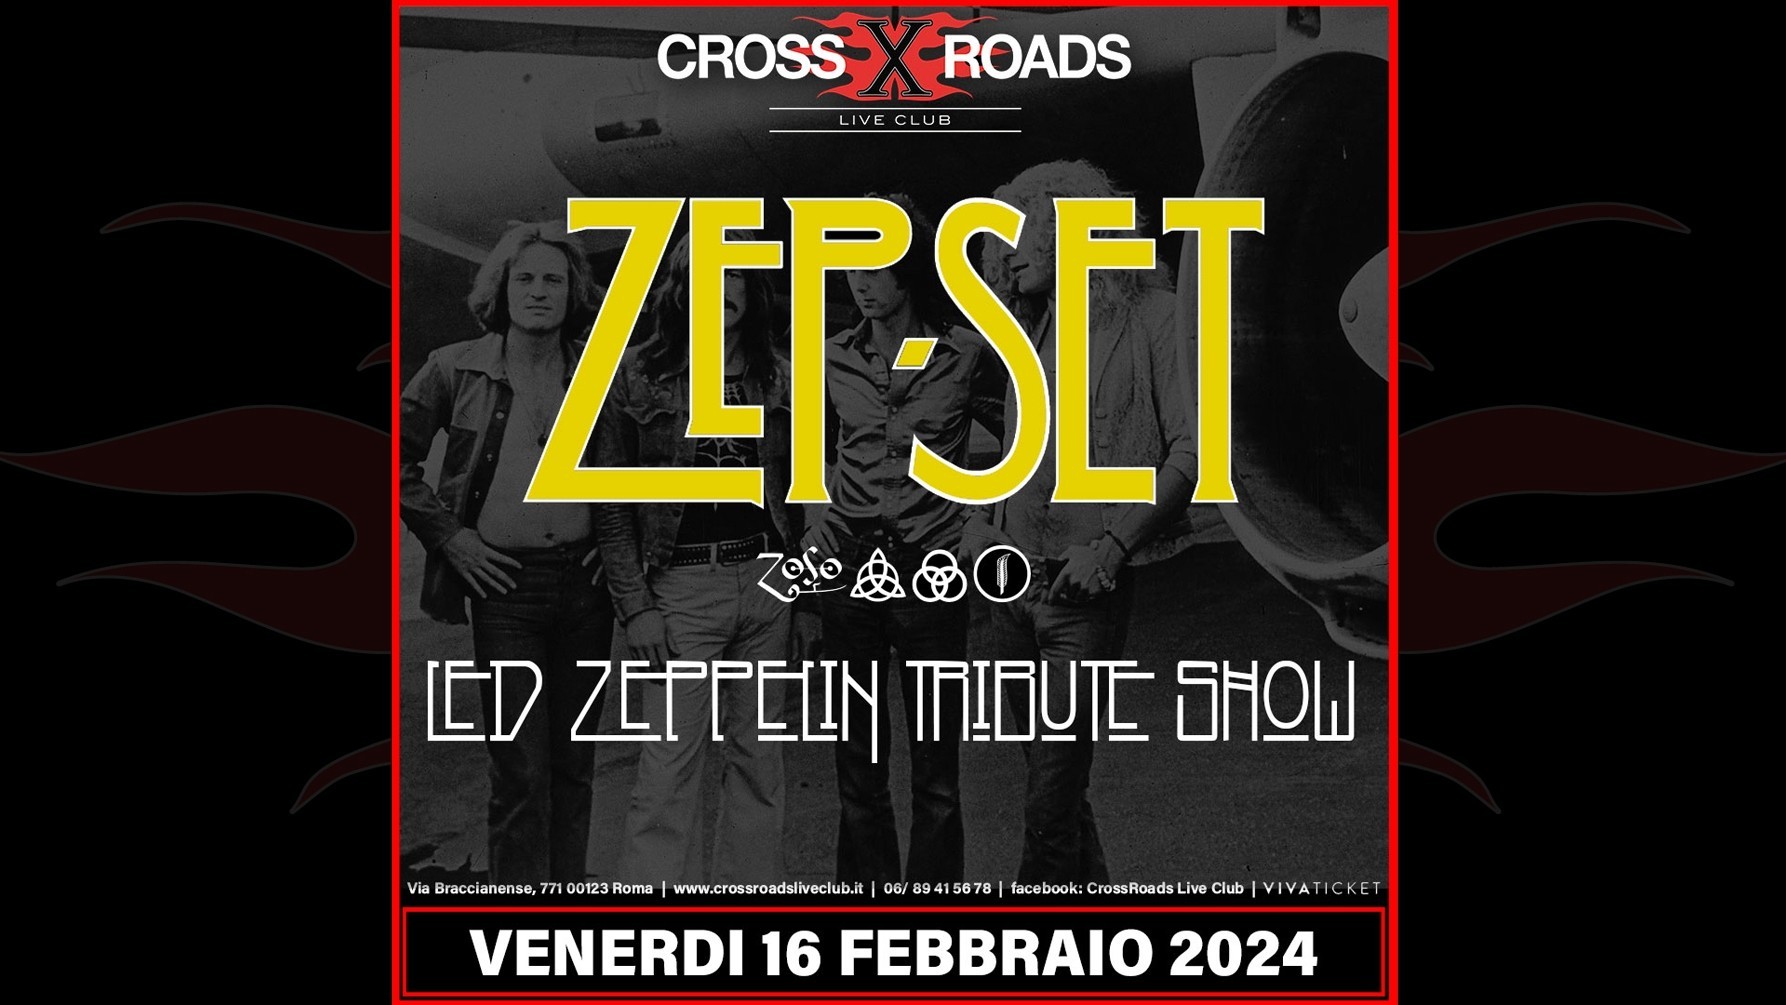 Led Zeppelin tribute Show by Zep Set